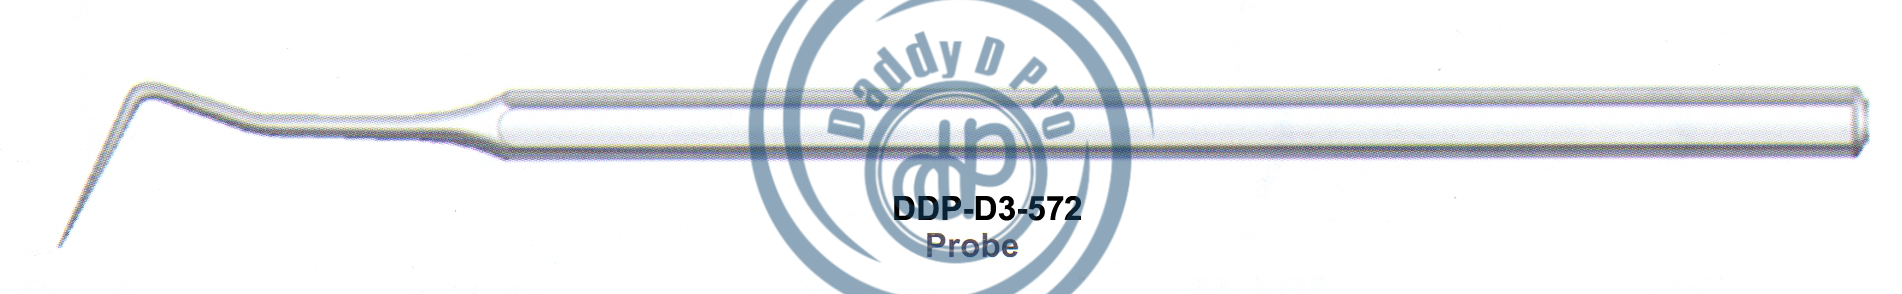 images/DDP-D3-572.png